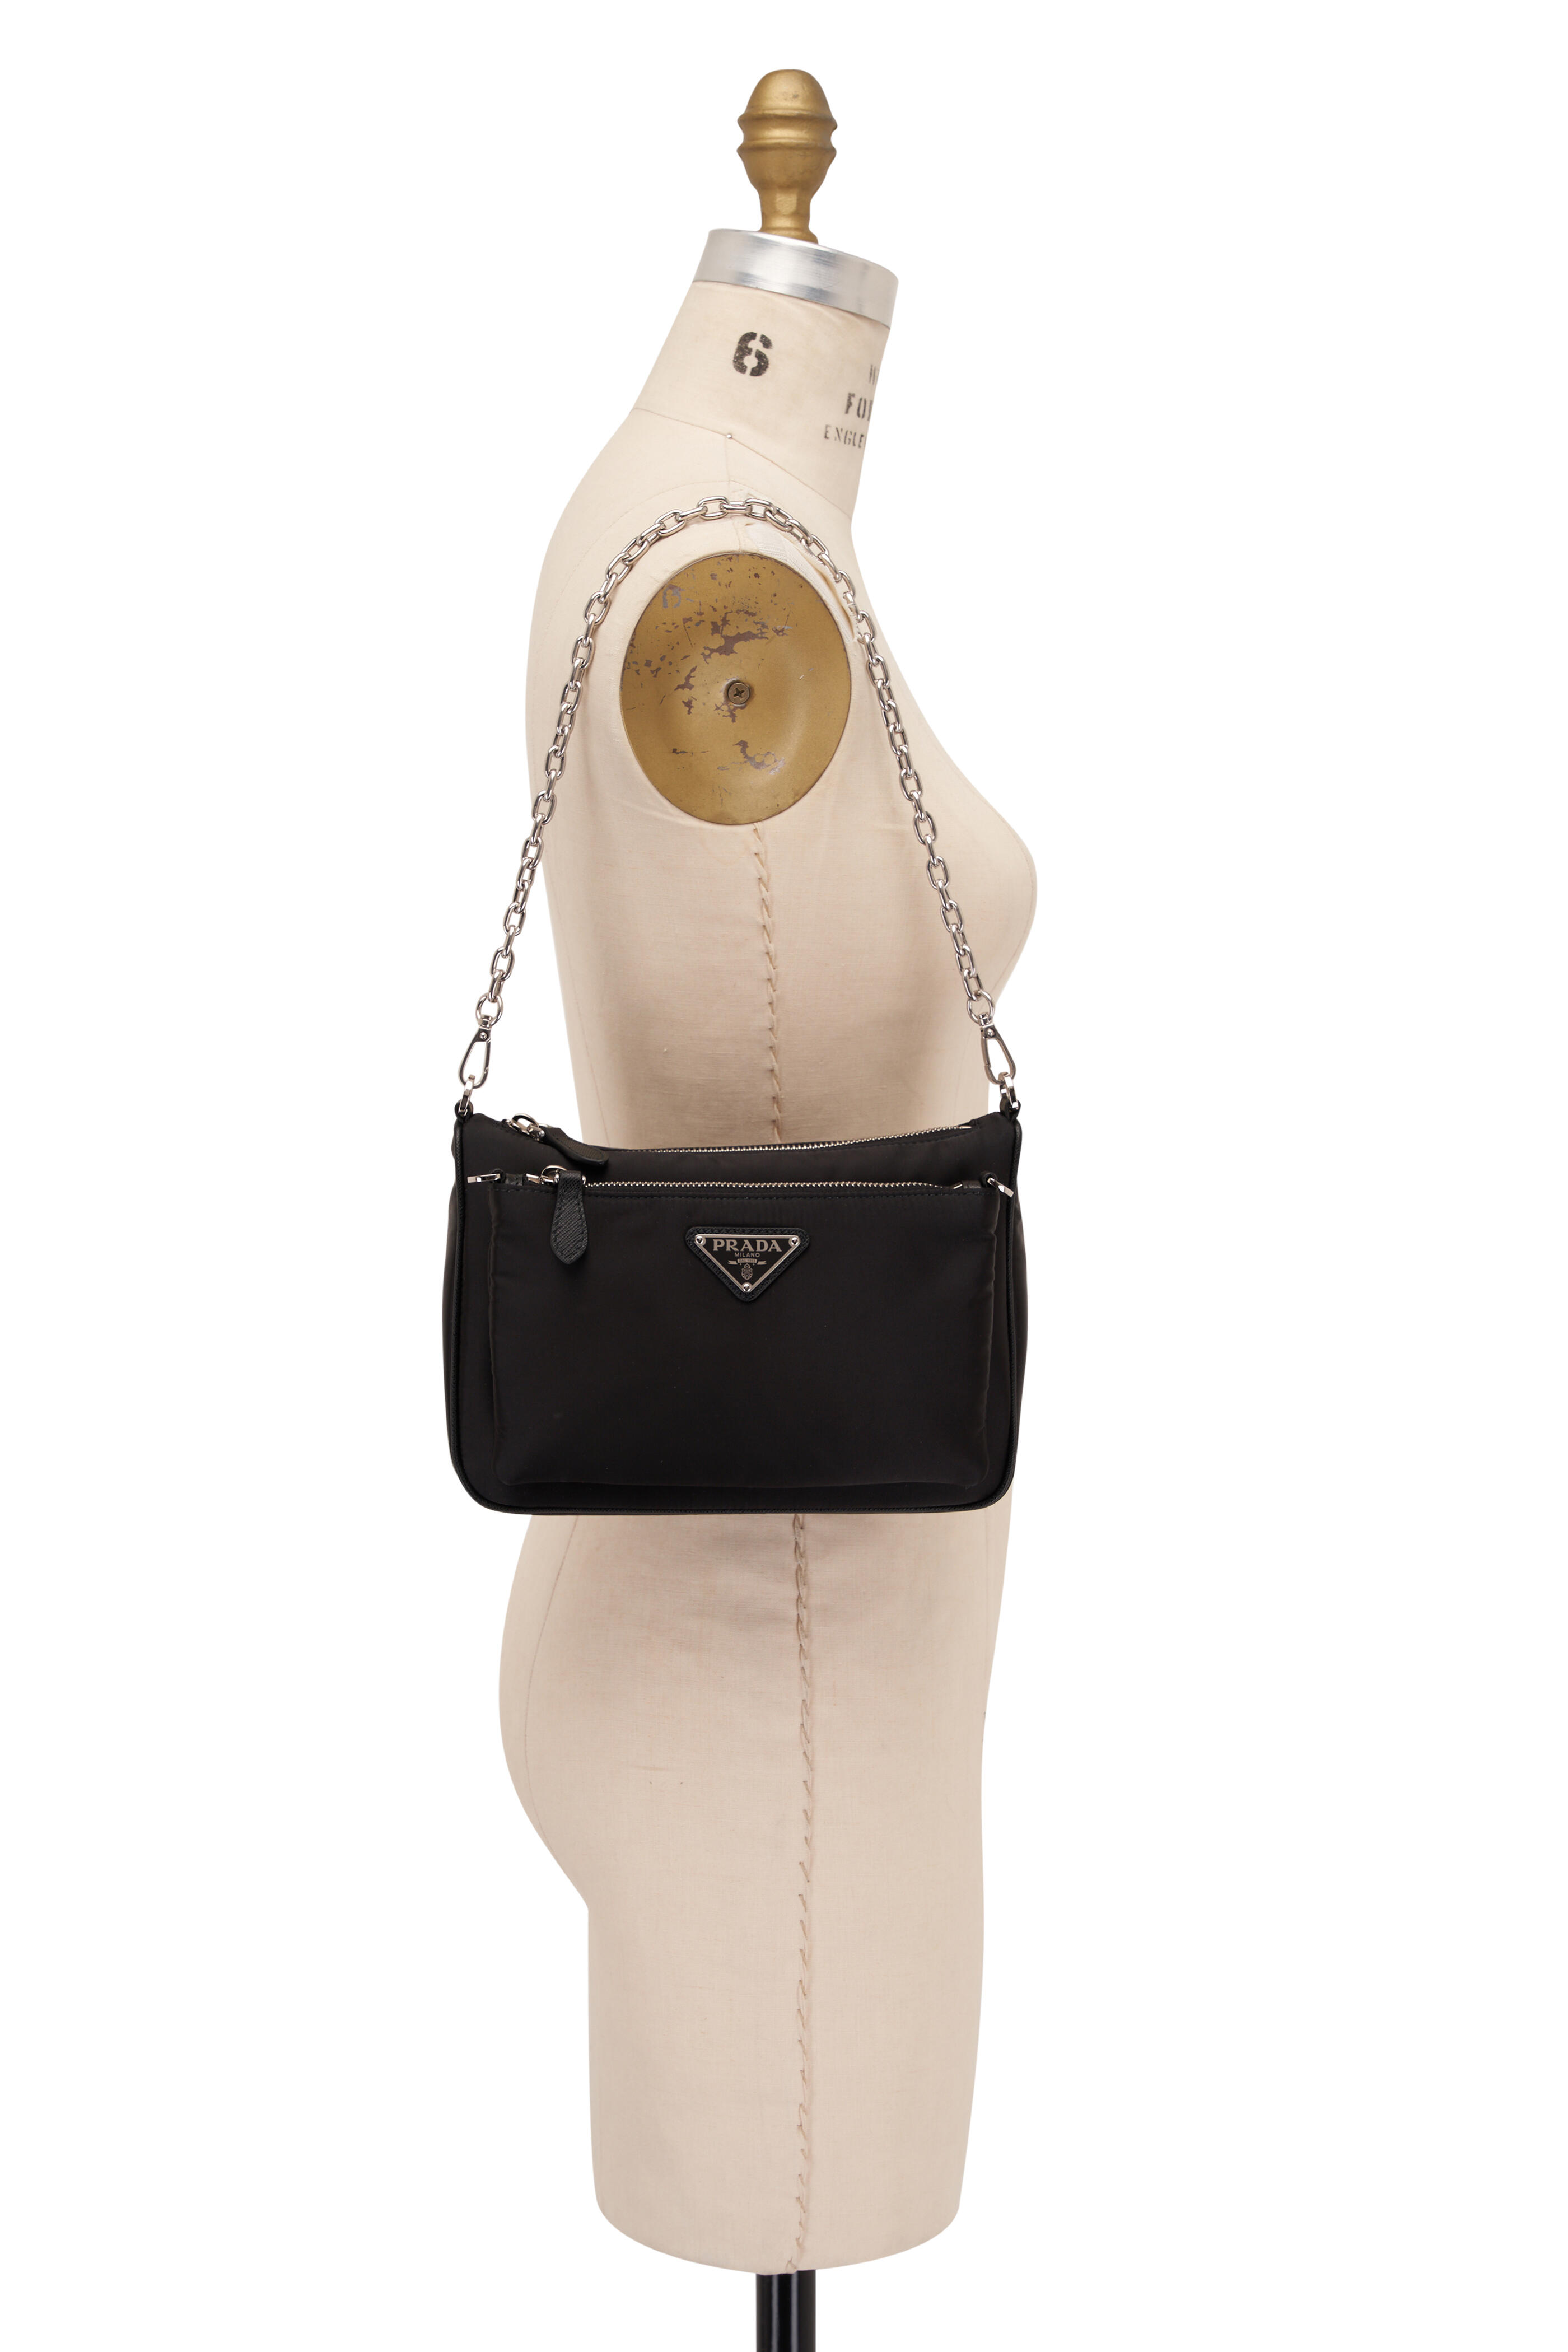 Prada Re-Nylon Shoulder Bag Black